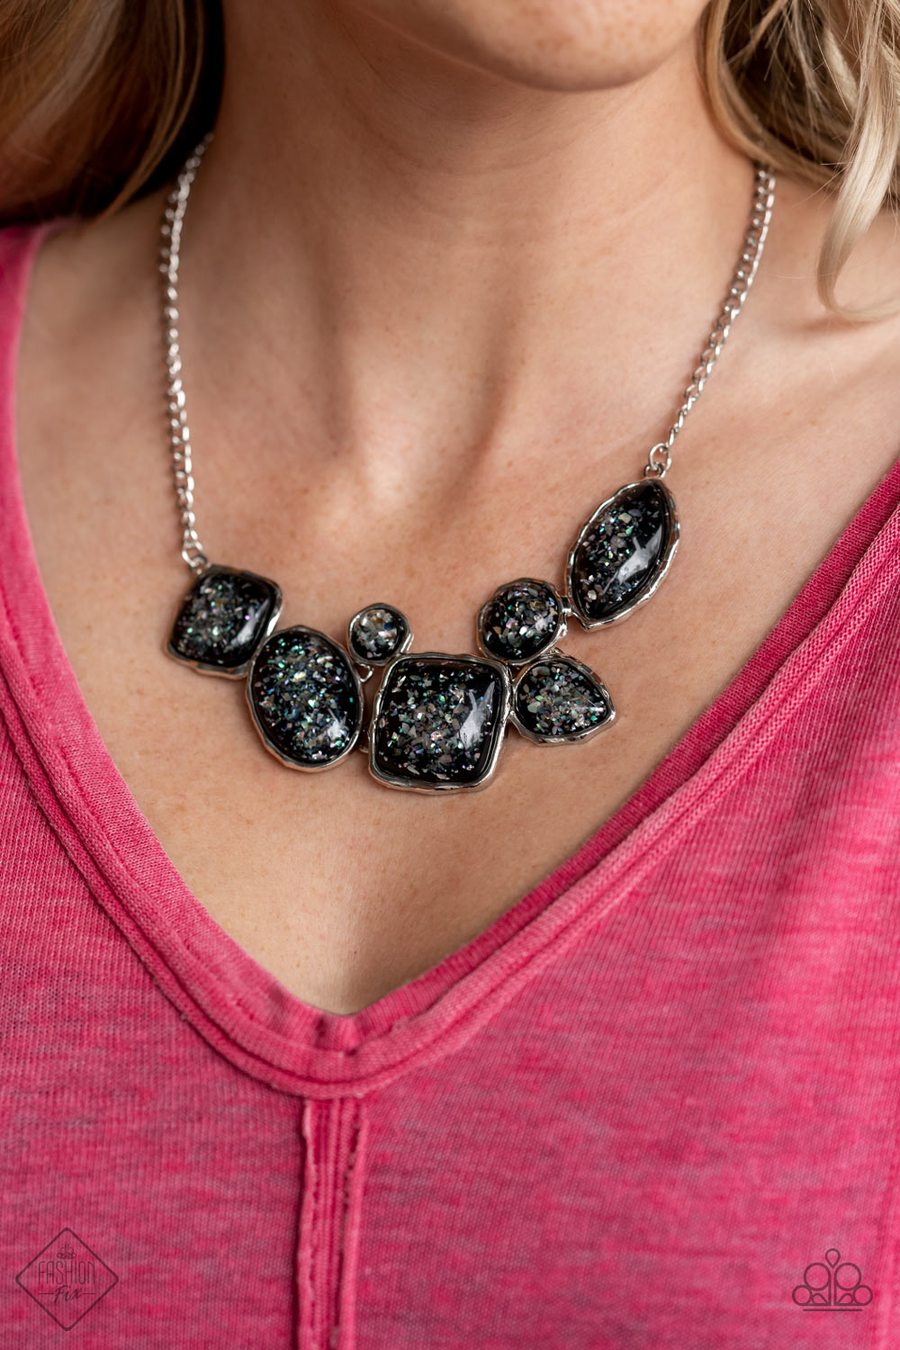 Paparazzi Accessories - So Jelly - Black Necklace